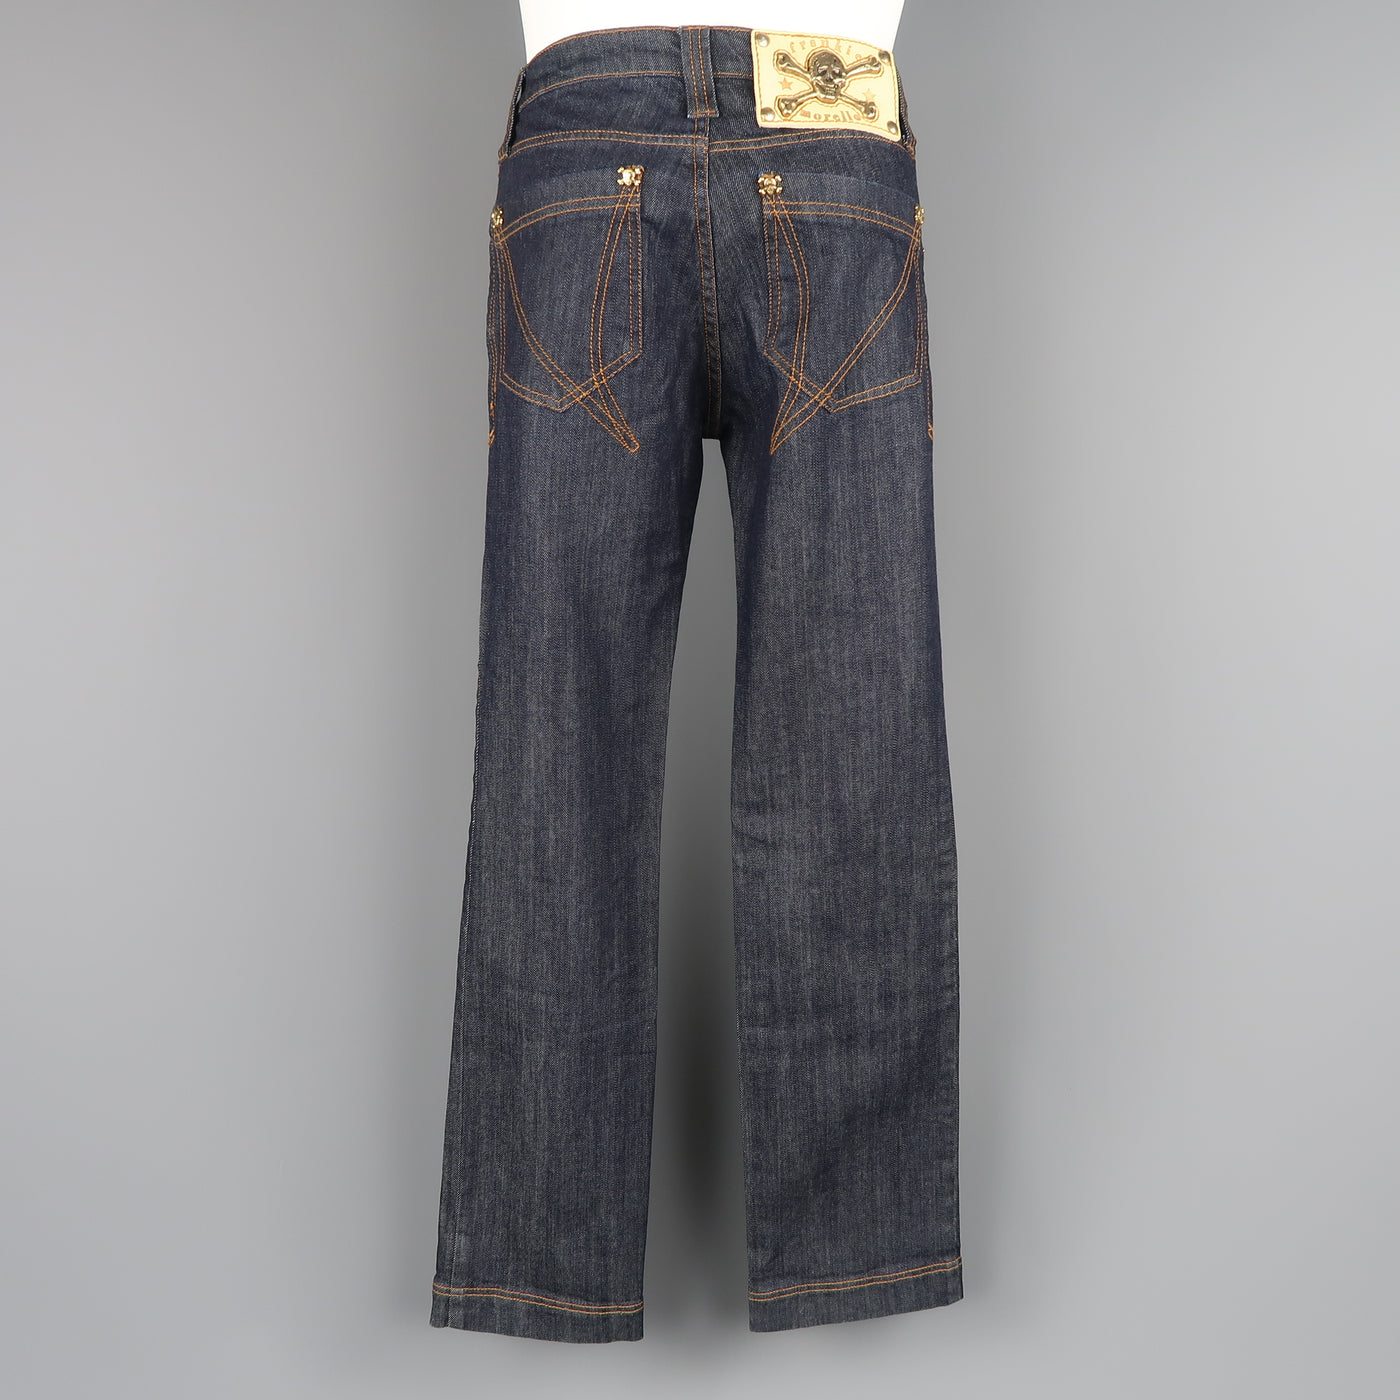 FRANKIE MORELLO 30 Indigo Contrast Stitch Denim Gold Skull Crossbones Stud Jeans